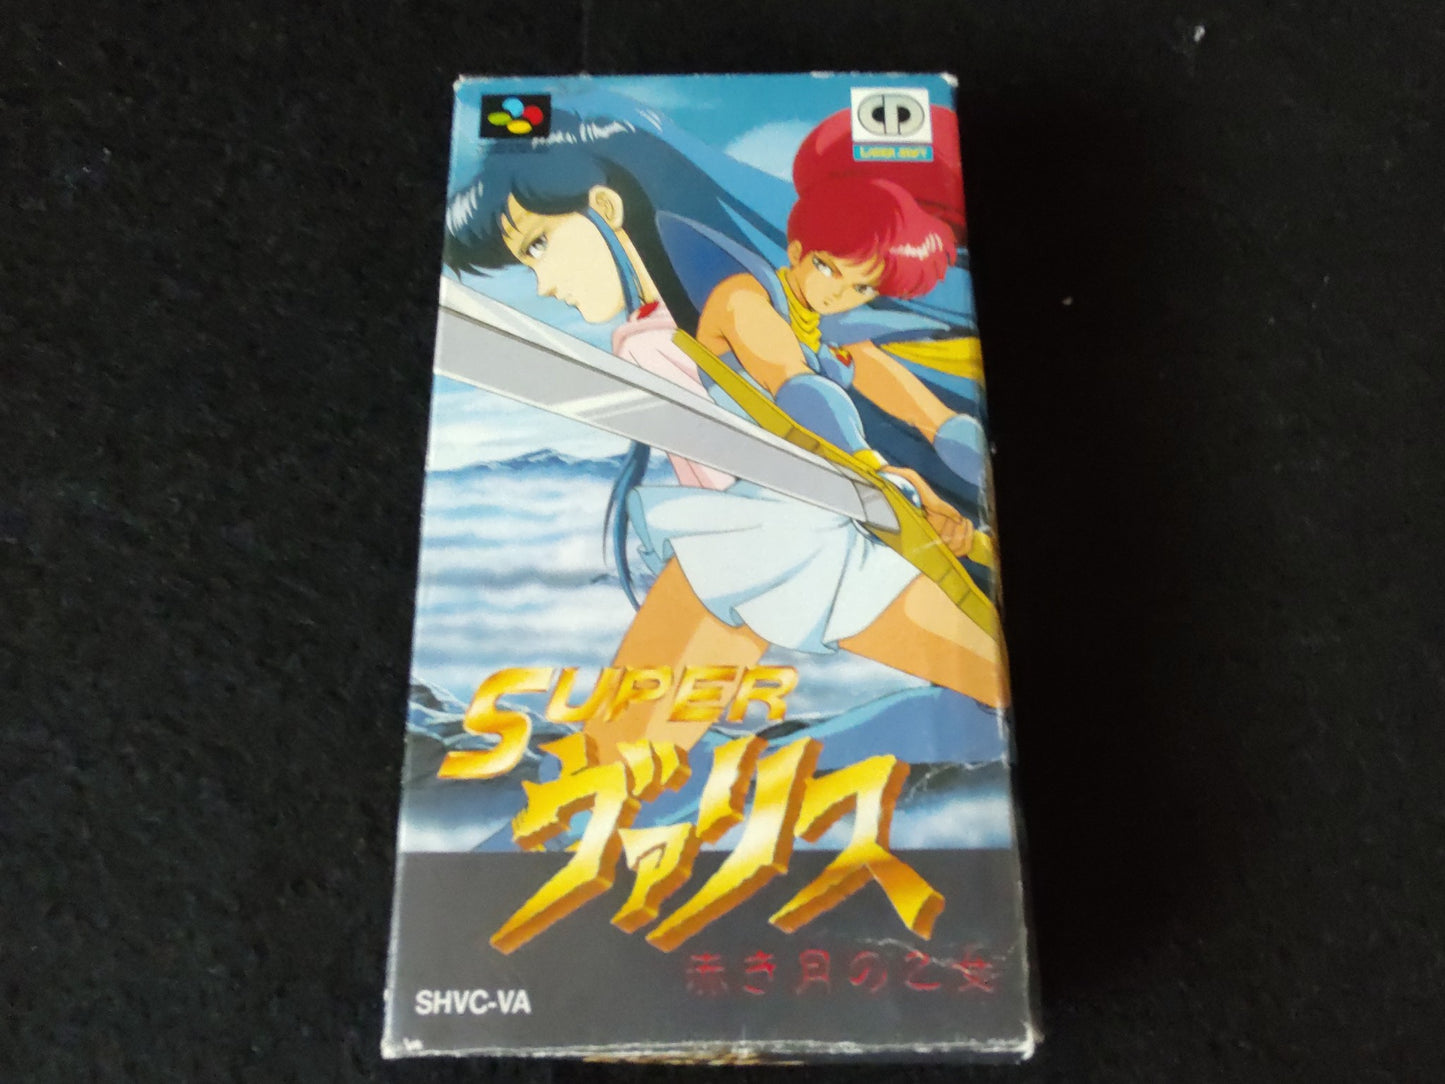 Super Valis - Akaki Tsuki no Otome- Super Famicom SFC Cart w/,Manual, Box-f0916-